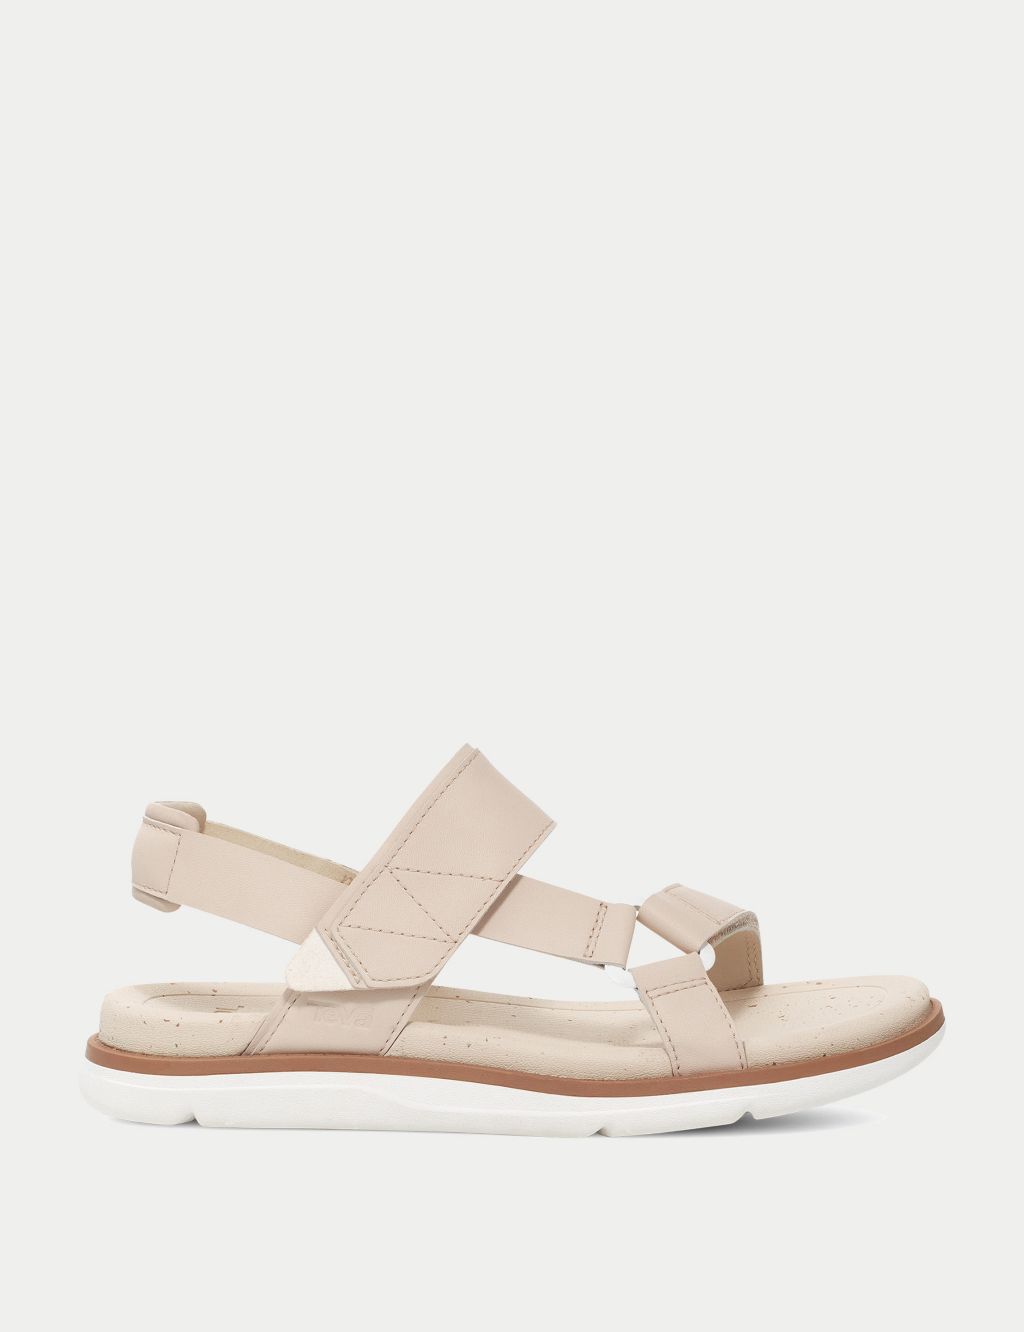 Madera Leather Flat Slingback Sandals